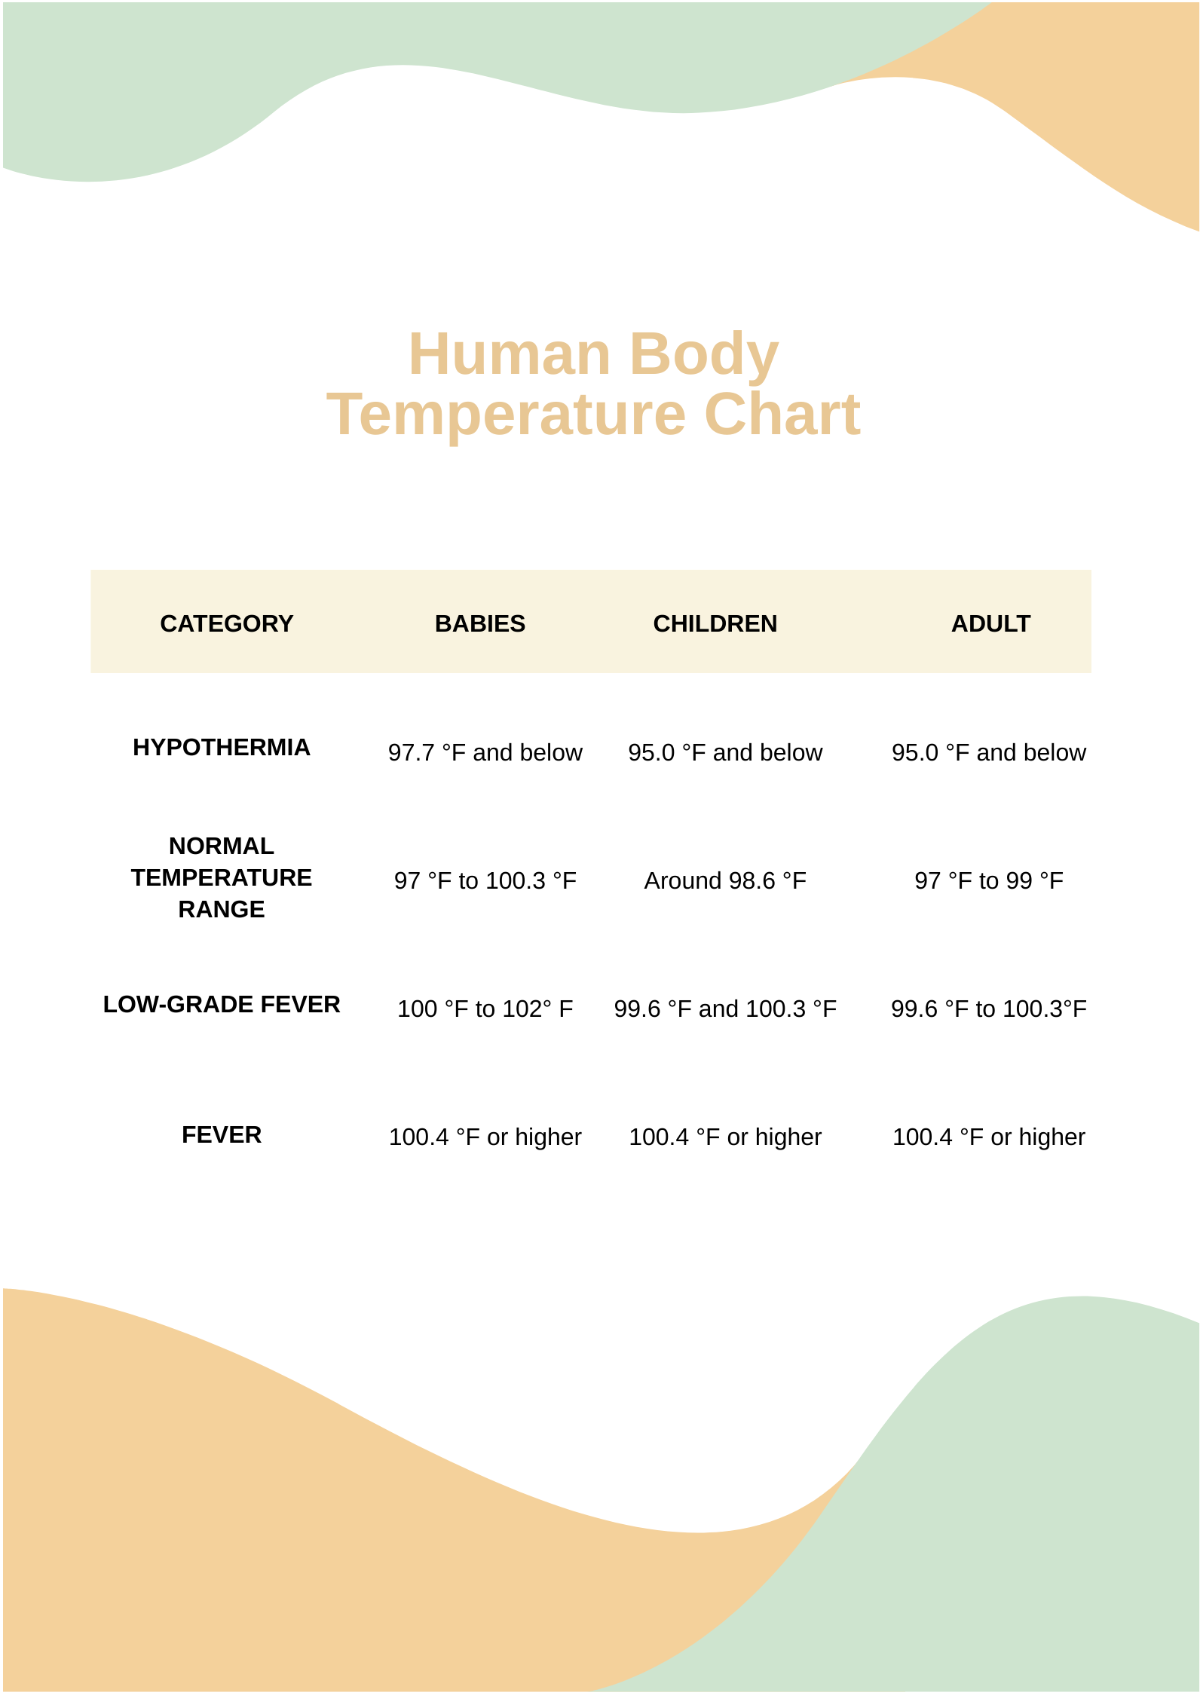 Human Body Temperature  Template